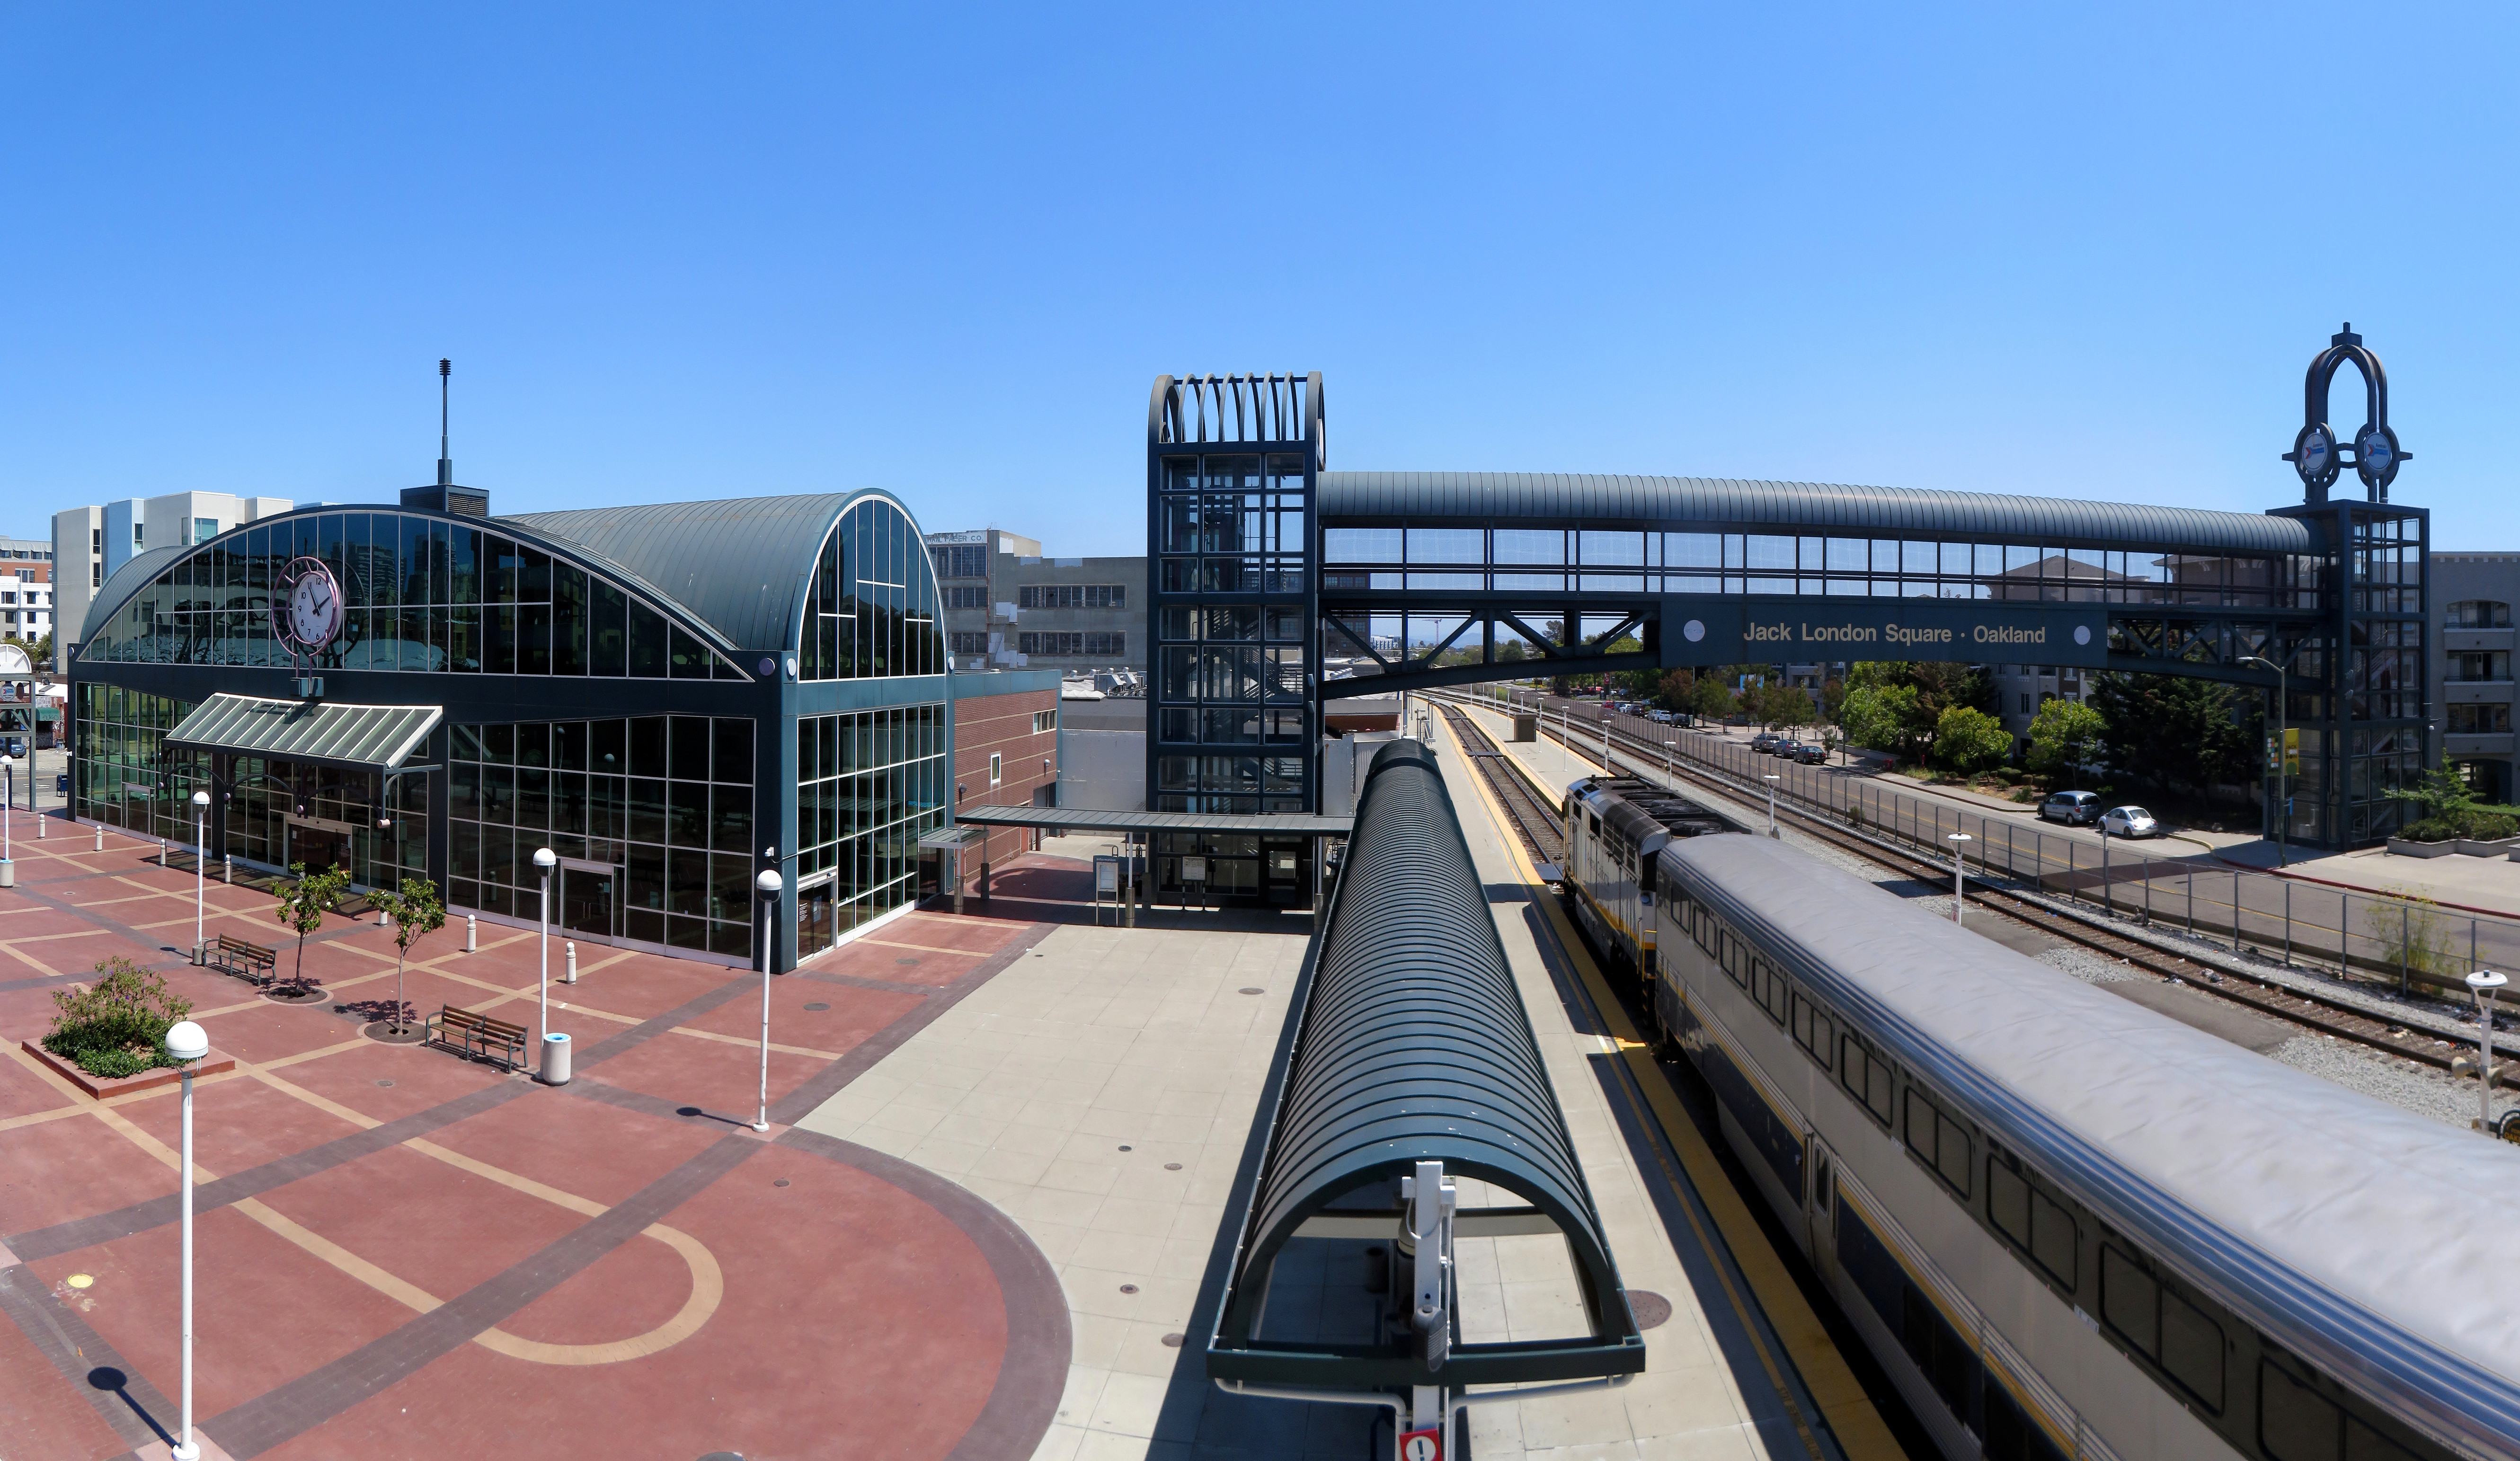 Oakland – Jack London Square station - Wikipedia